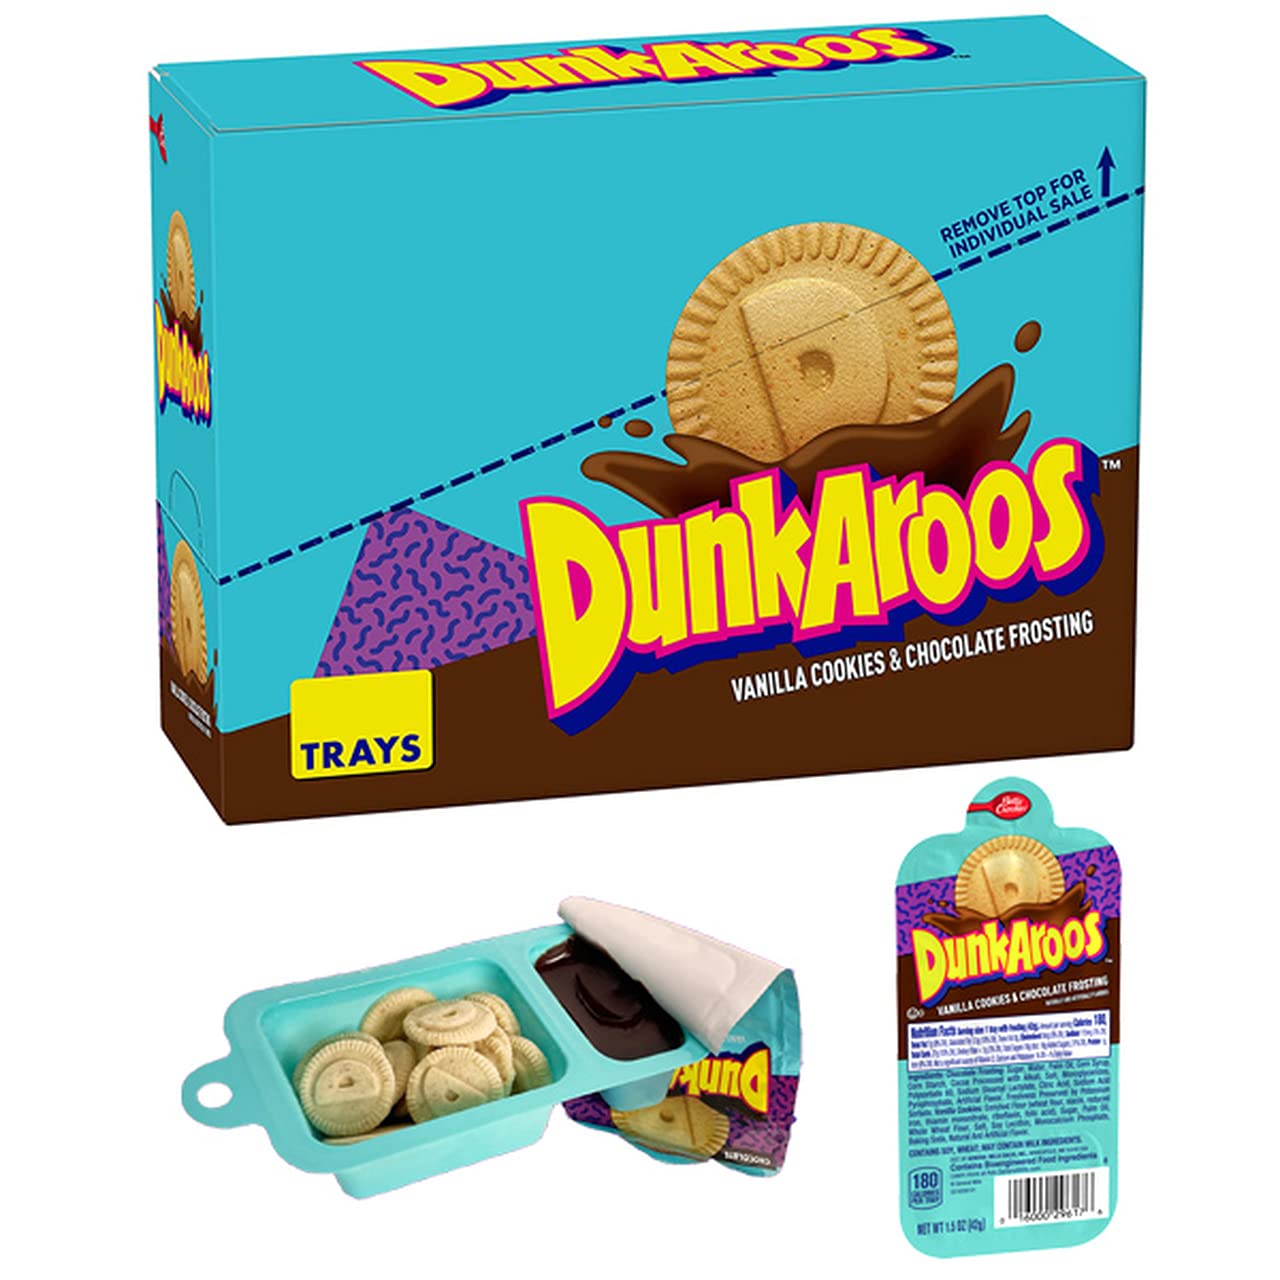 Dunkaroos CHOCOLATE FROSTING & Vanilla Cookies - Betty Crocker, Case 12 count-1 oz trays